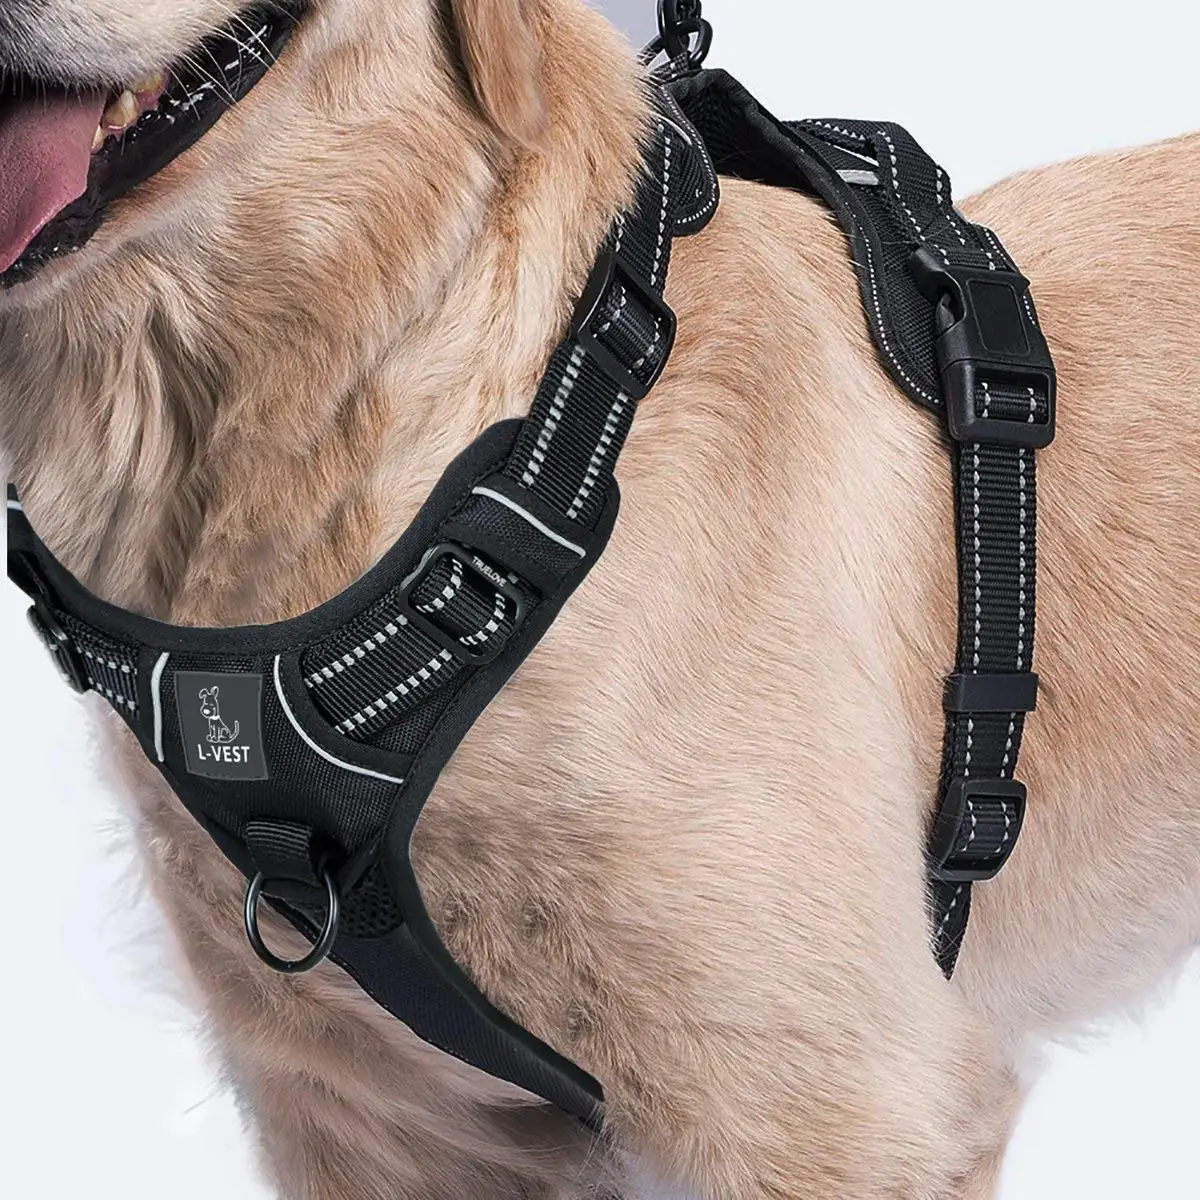 Easy Walk Dog Harness Sizing Chart